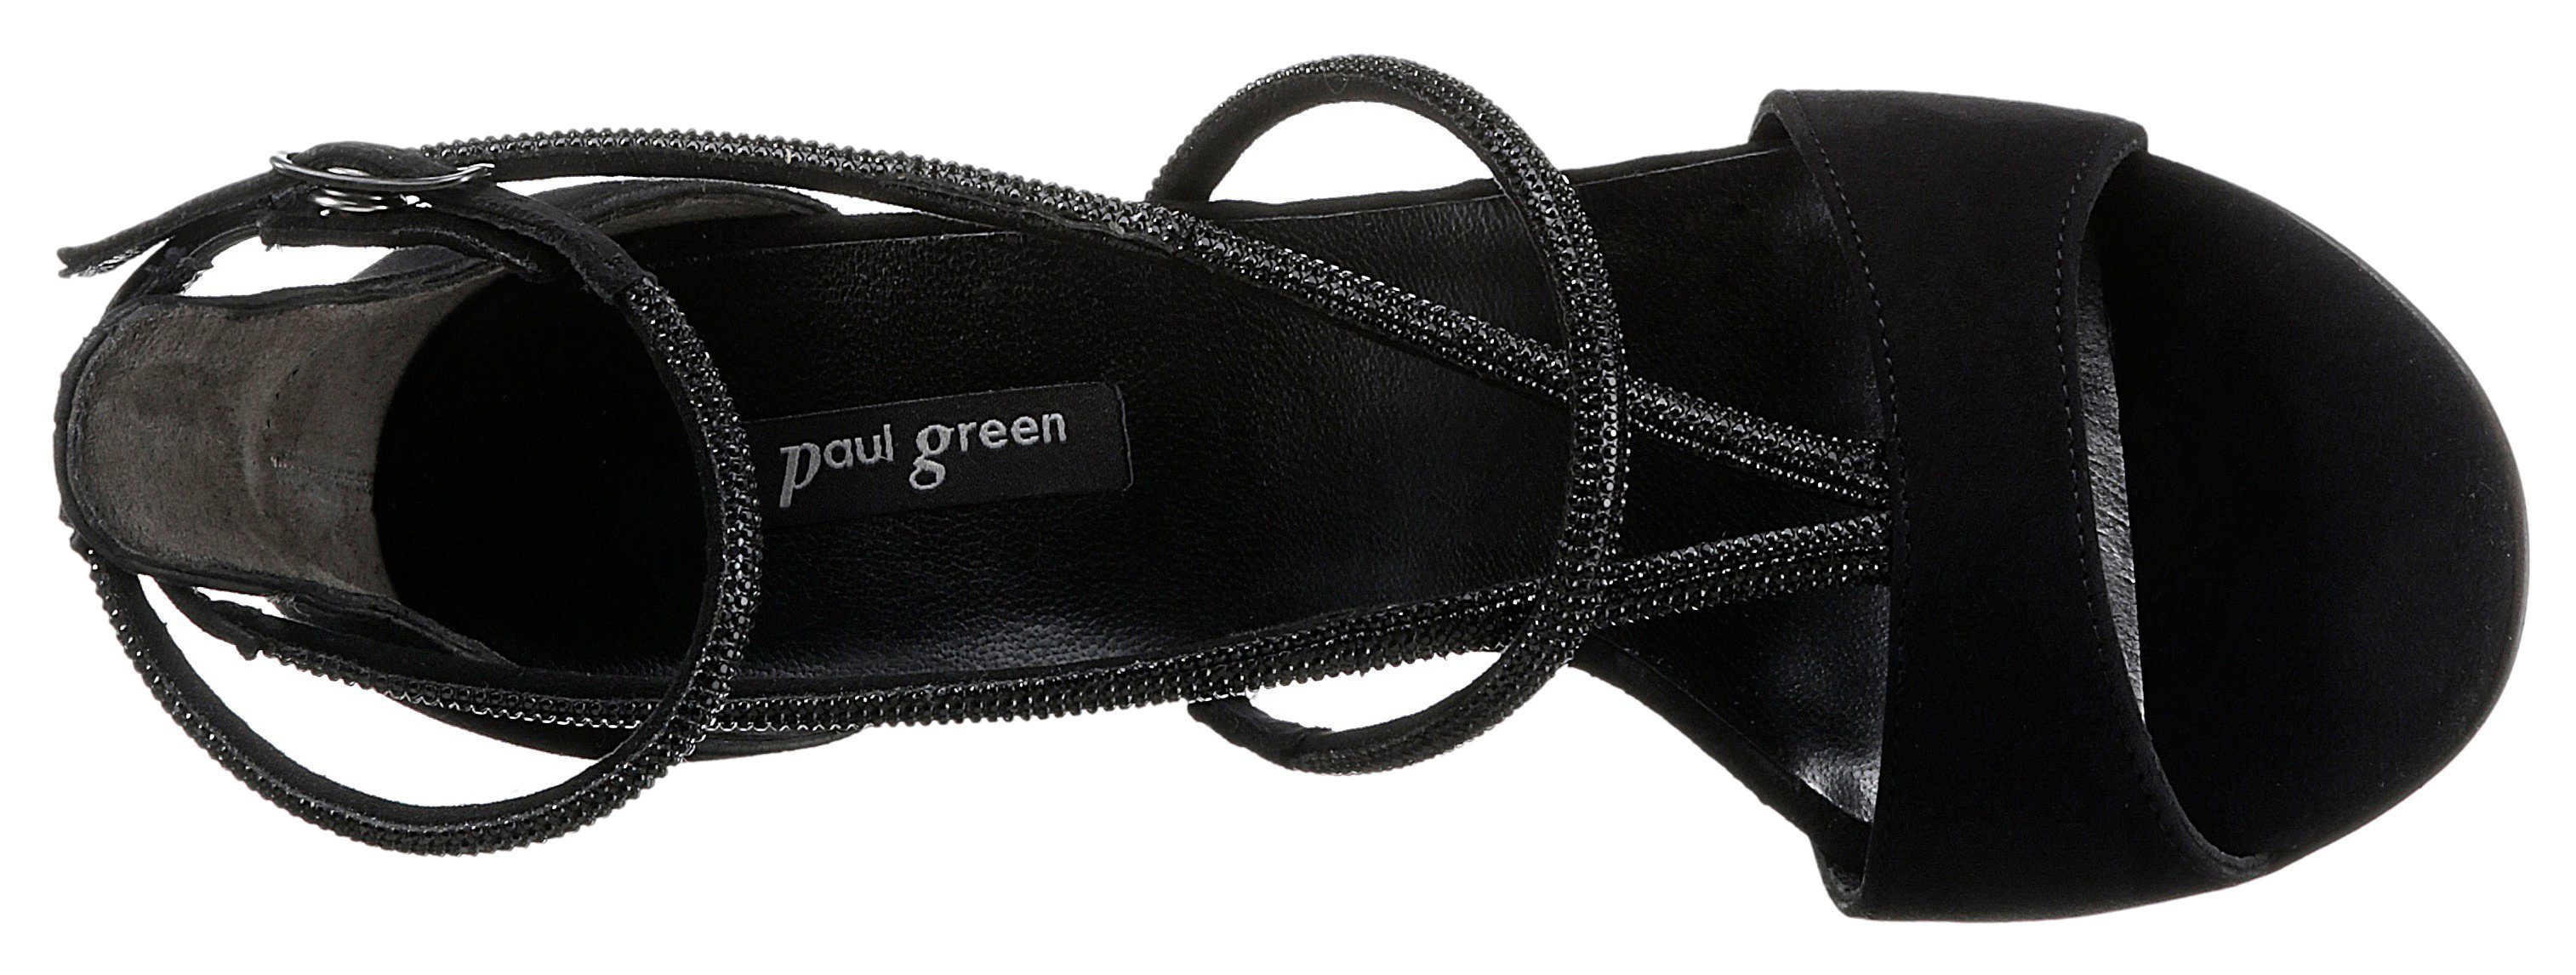 Paul eleganter schwarz Green Sandalette in Optik